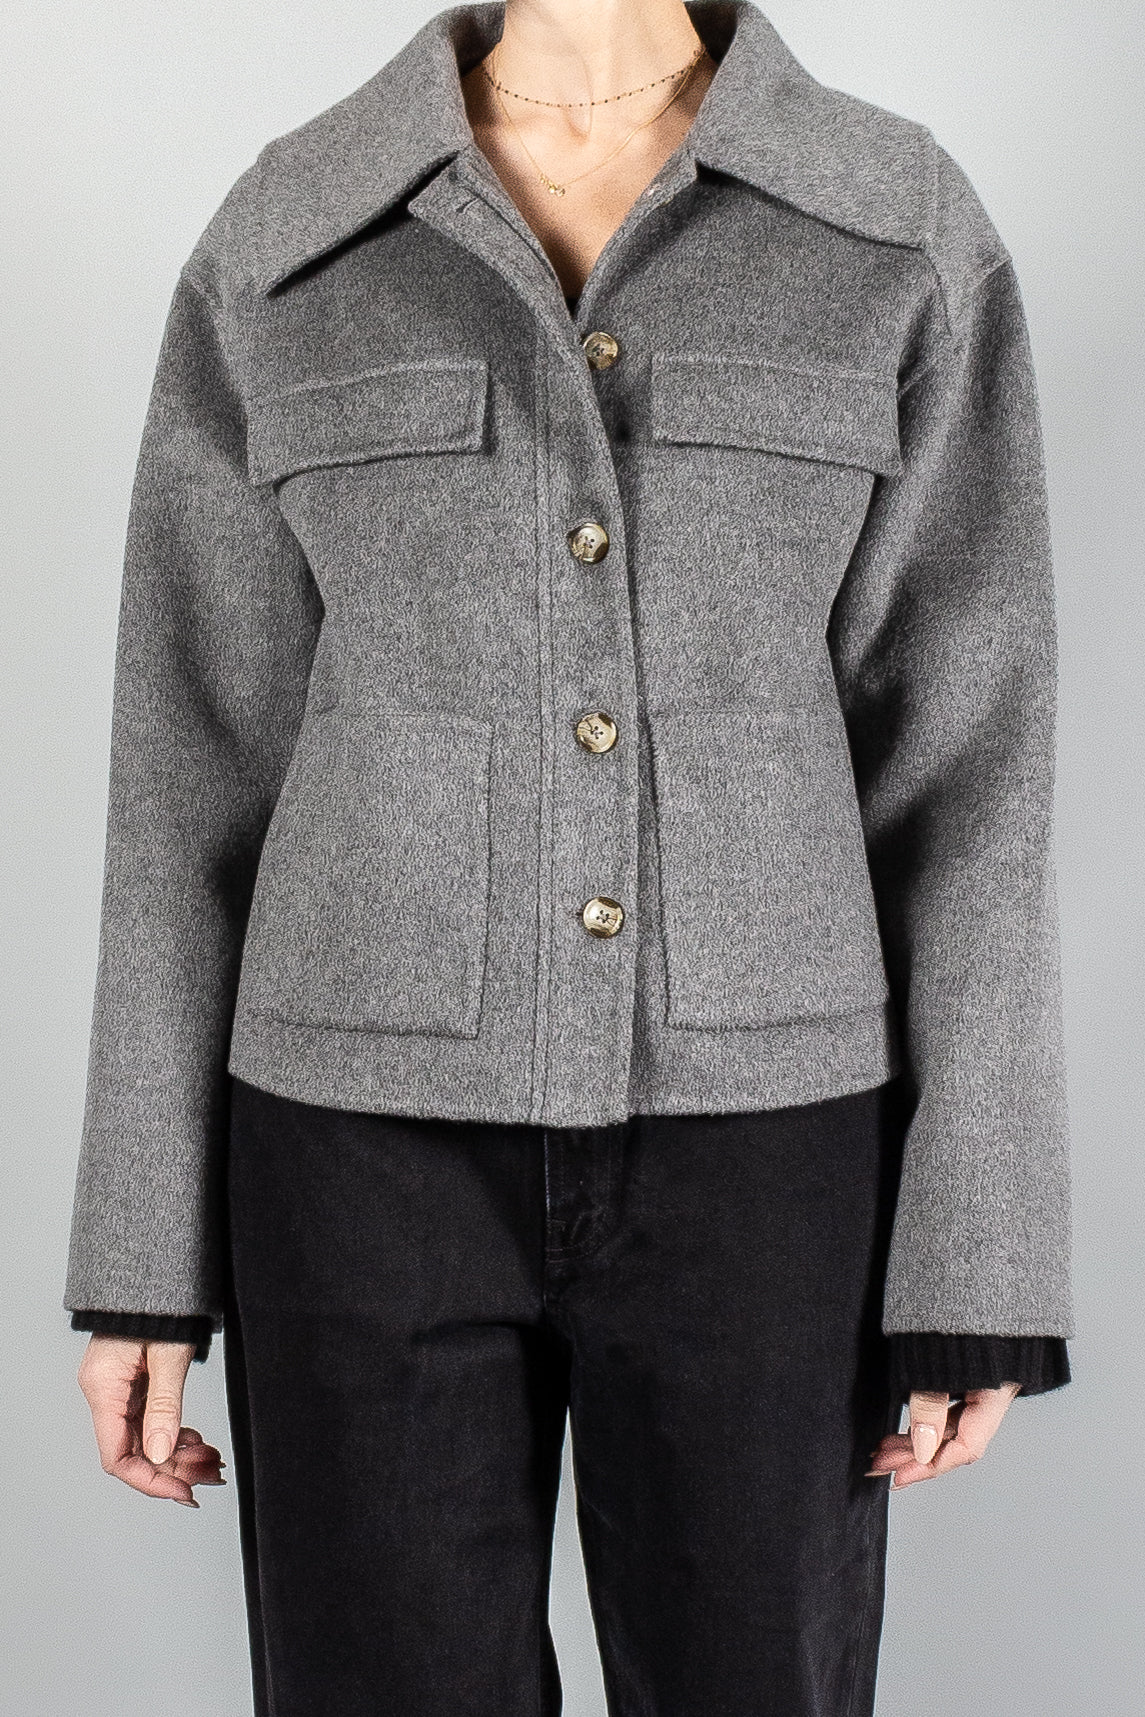 Loulou Studio Cilla Jacket-jackets and blazers-Misch-Boutique-Vancouver-Canada-misch.ca